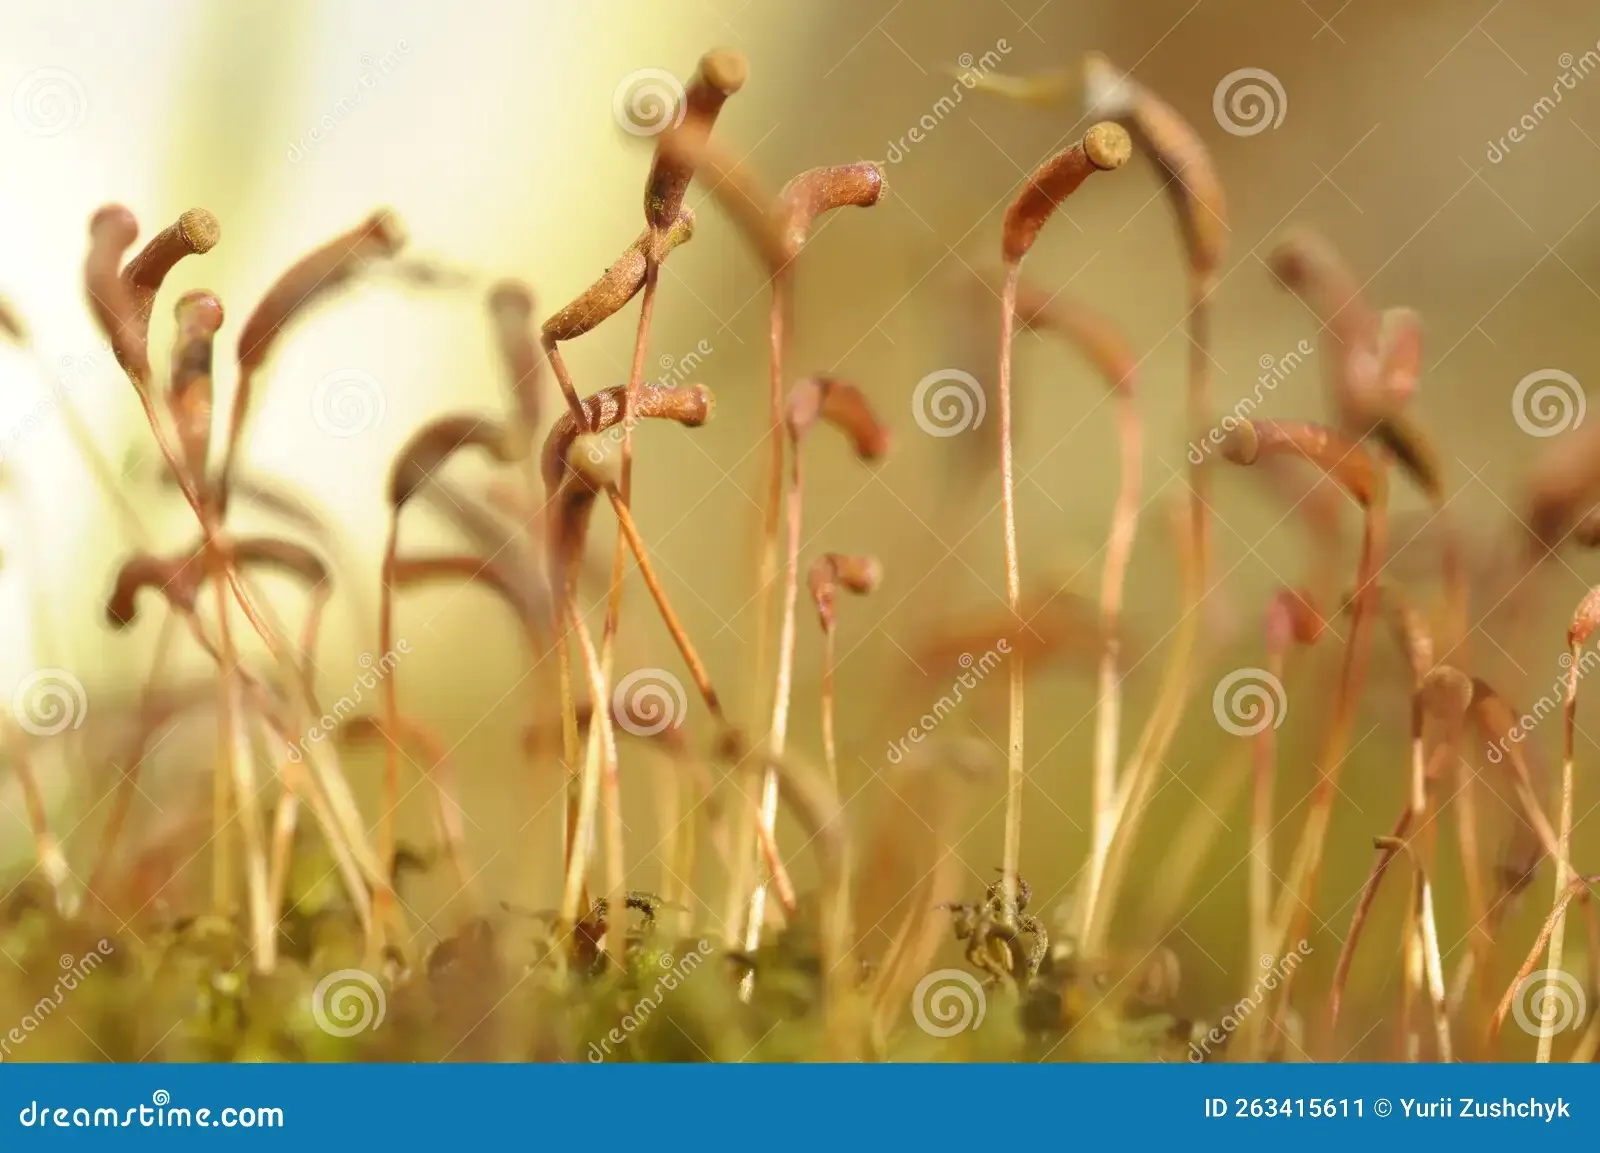 moss-aulacomnium-androgynum-seeds-growing-ground-263415611.jpg